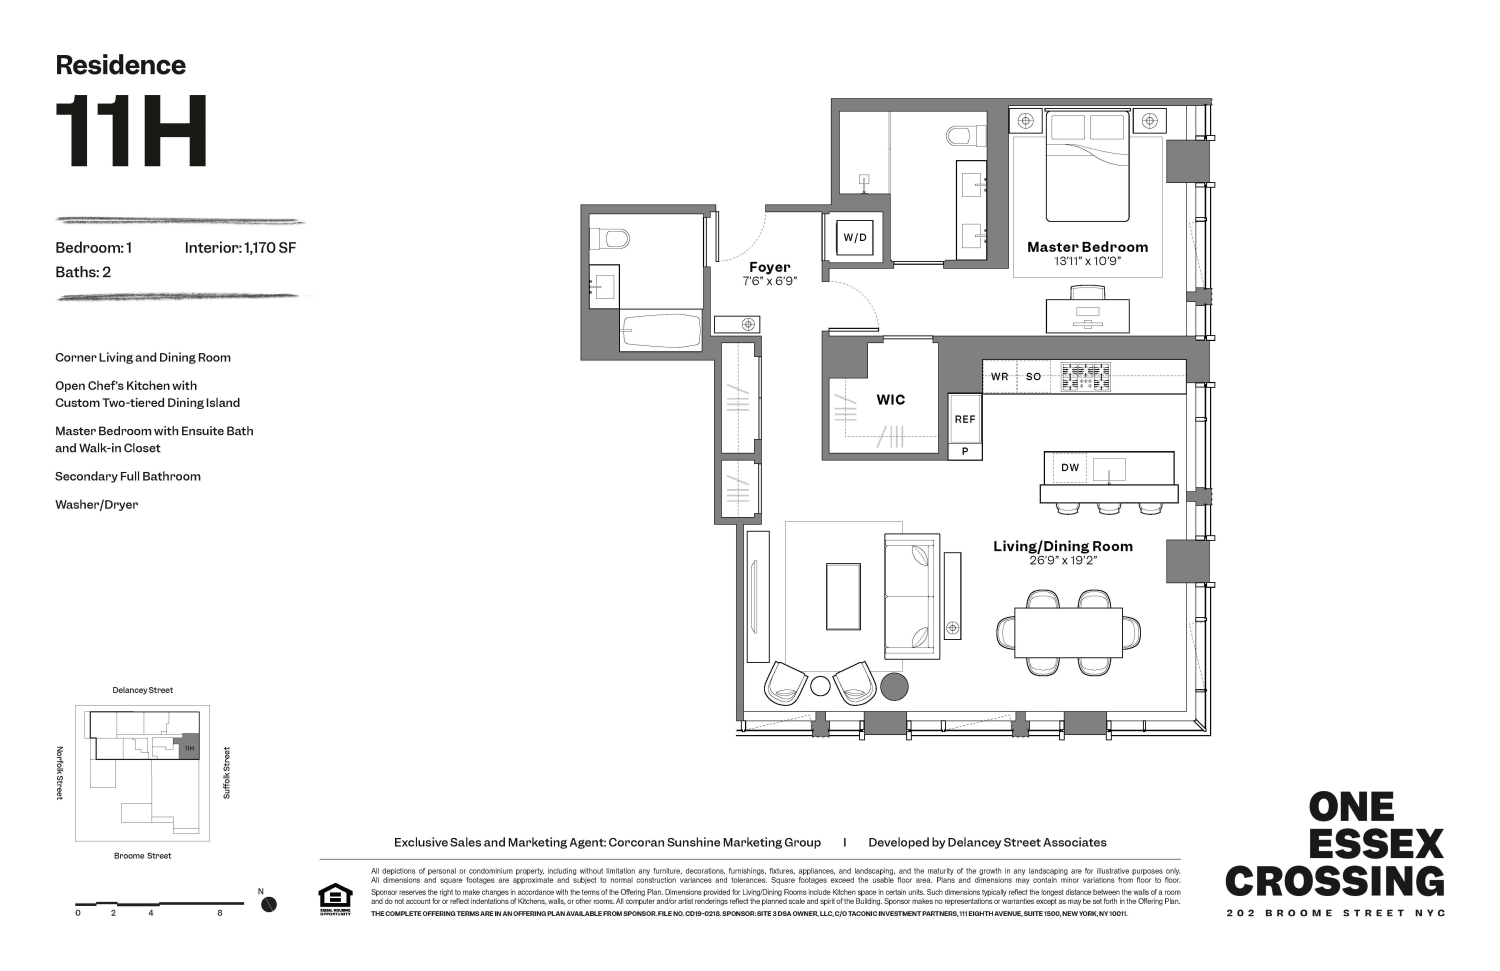 Floorplan for 202 Broome Street, 11H